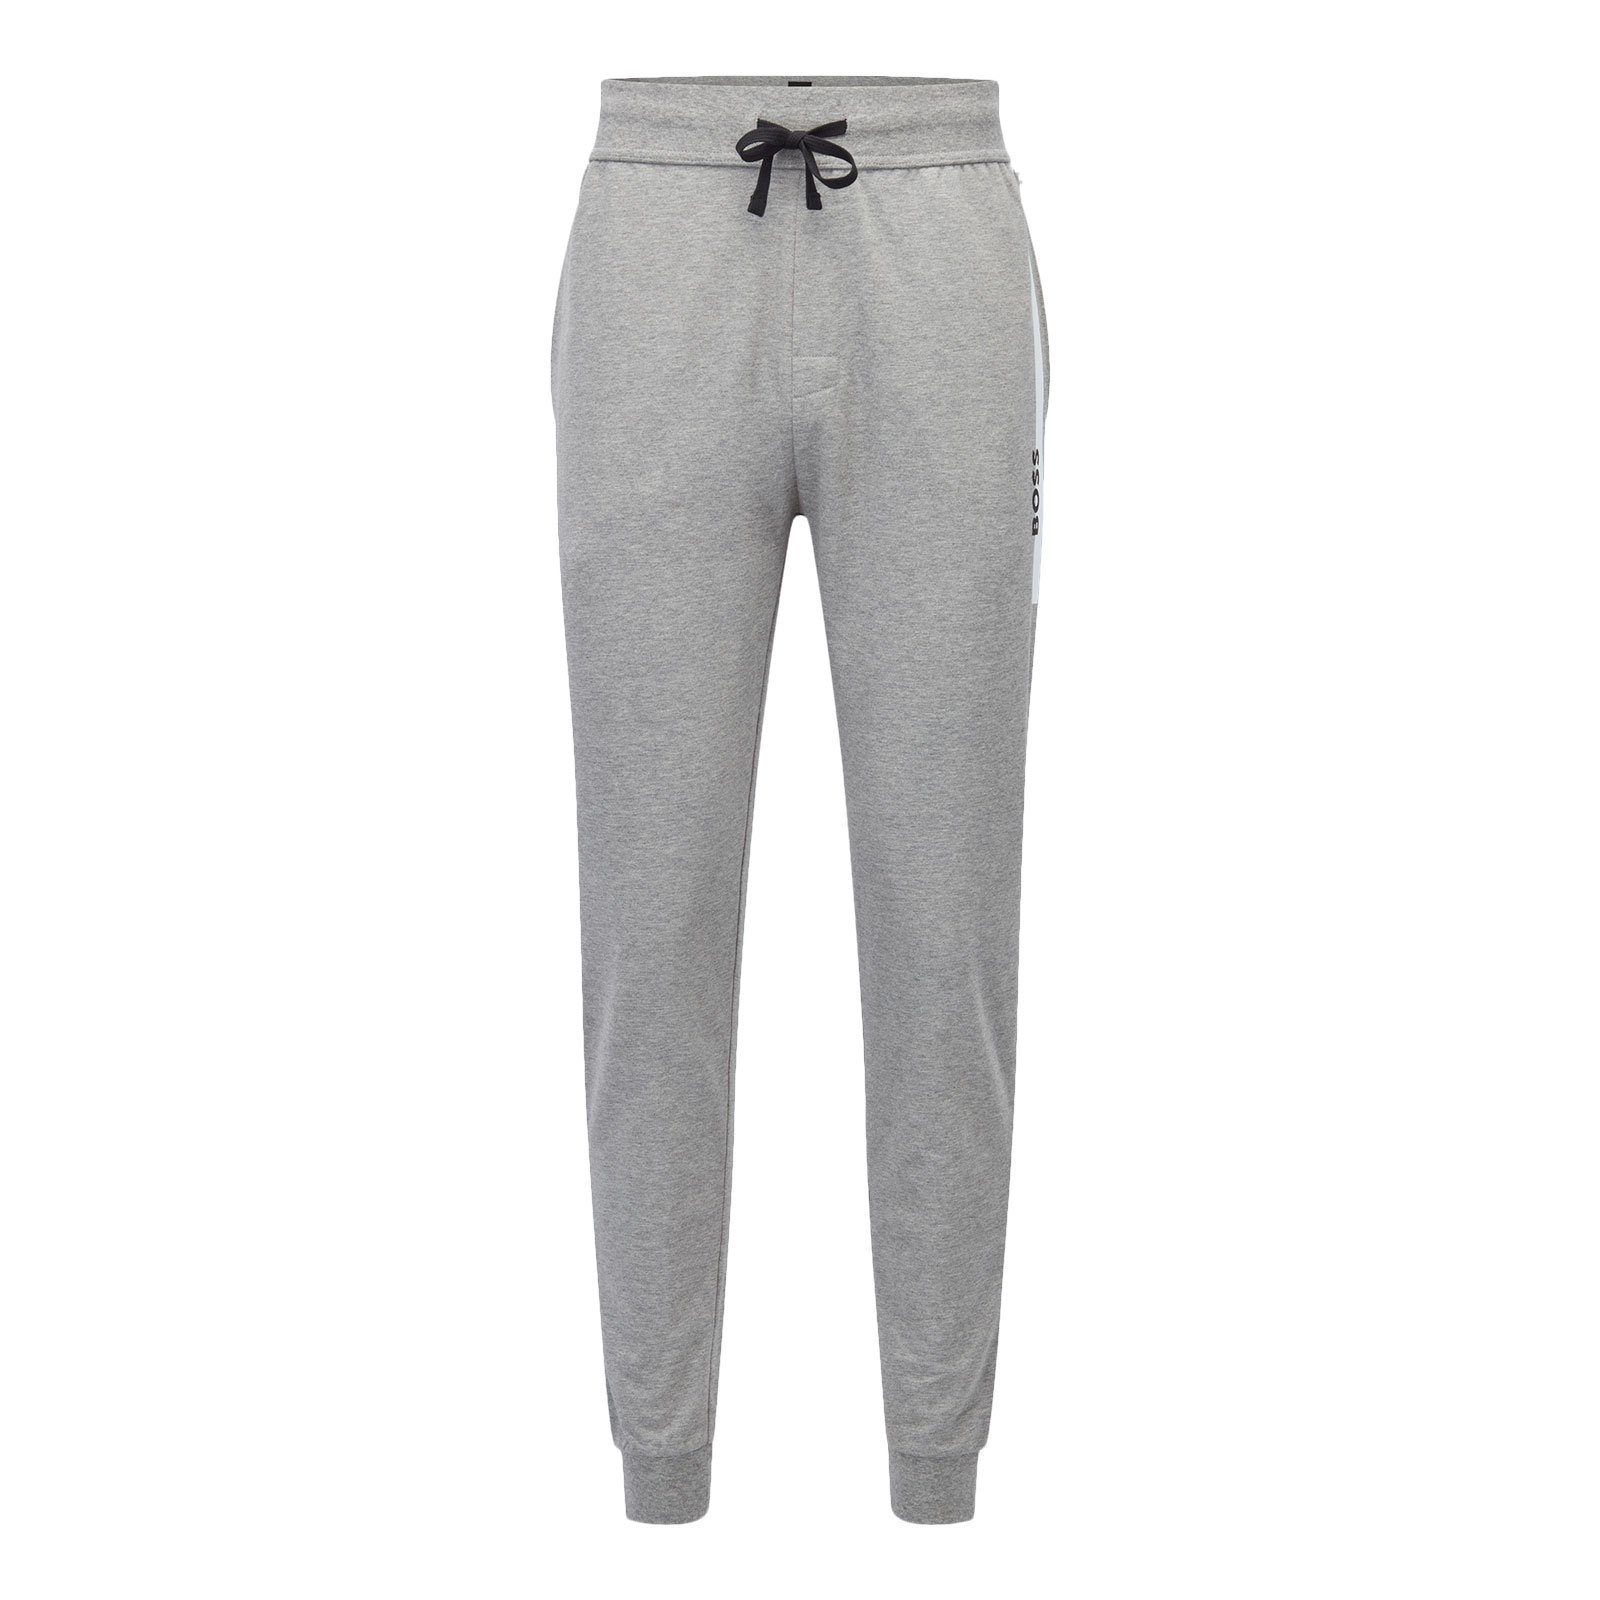 BOSS Jogginghose Authentic Pants mit mittlerer Bundhöhe 033 medium grey